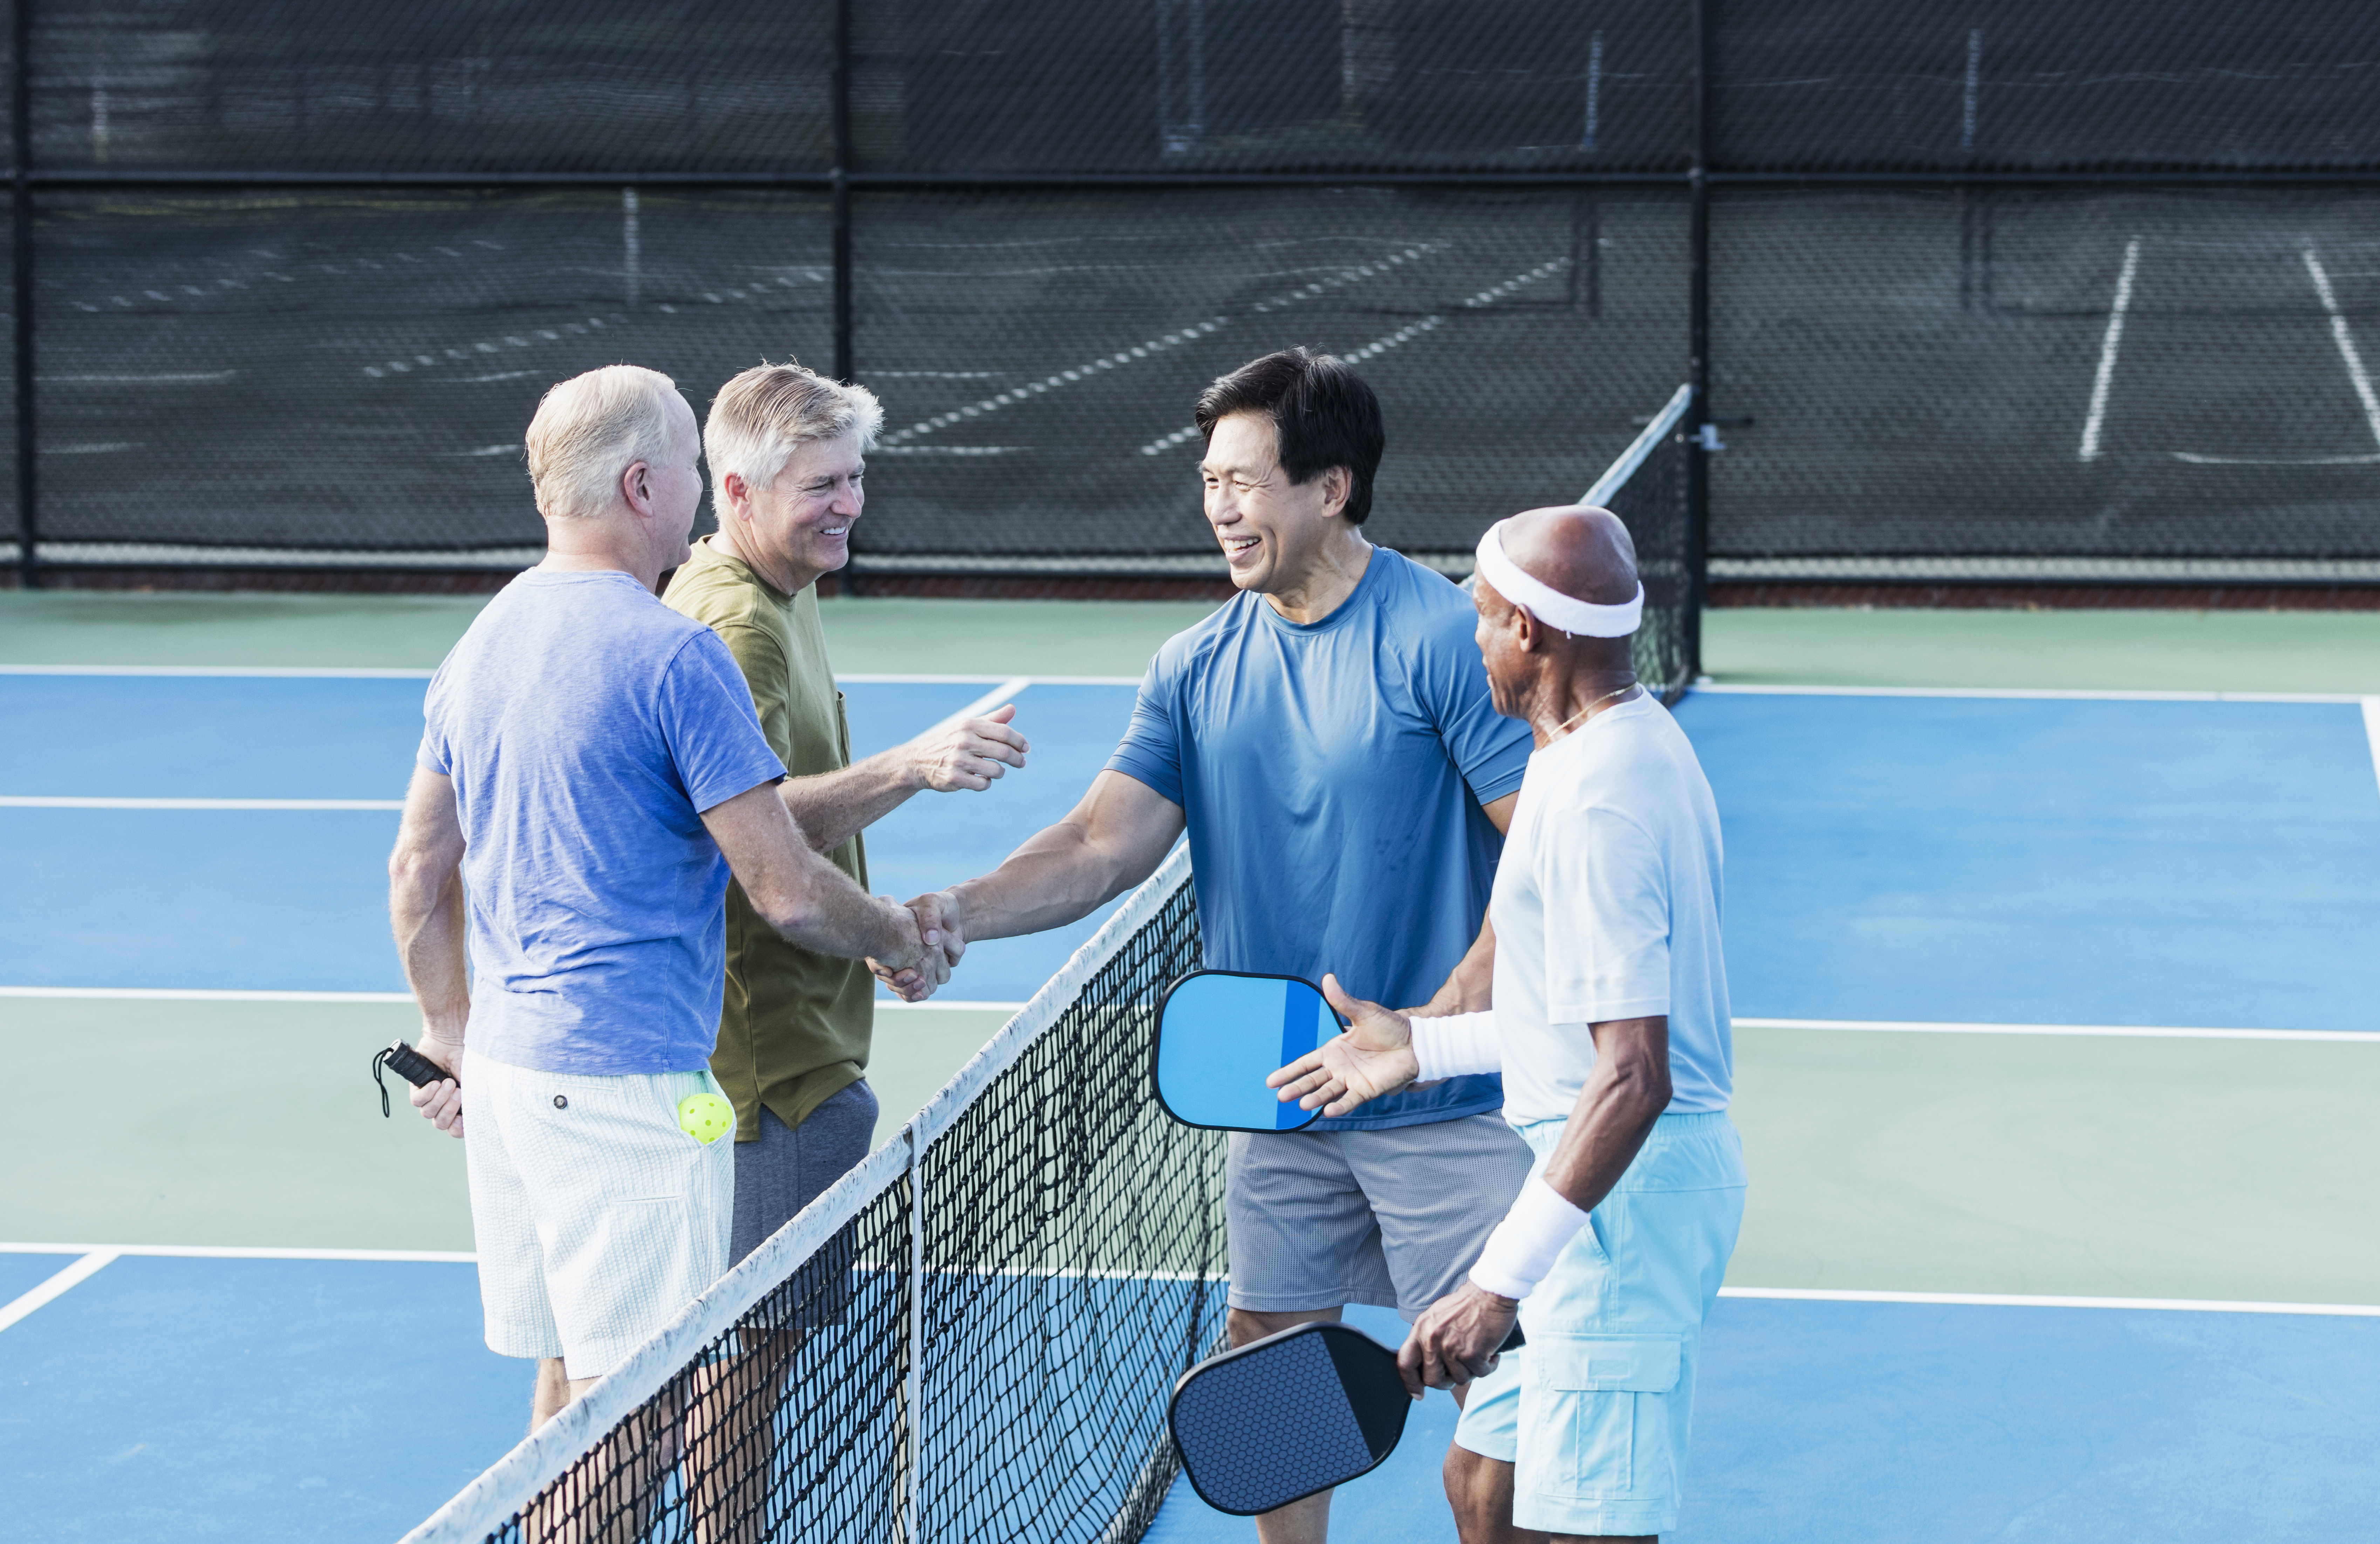 Men Shaking Hands on Tennis Court